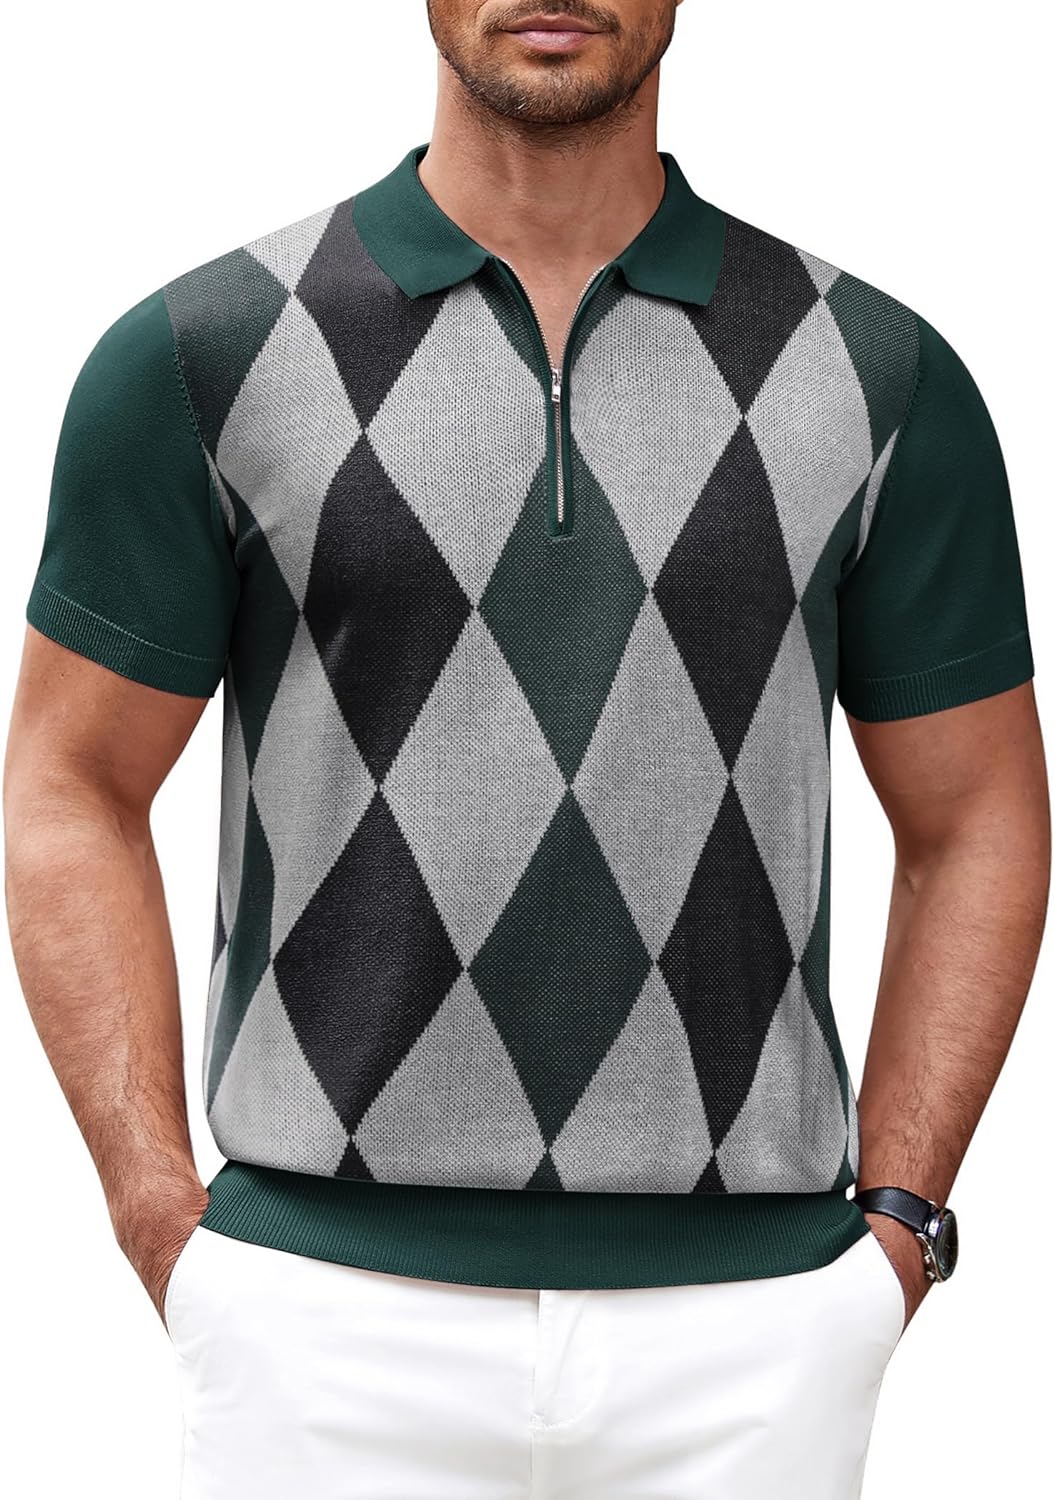 COOFANDY Men's Zipper Polo Shirt Casual Knit Short Sleeve Polo T Shirt Classic Fit Shirts